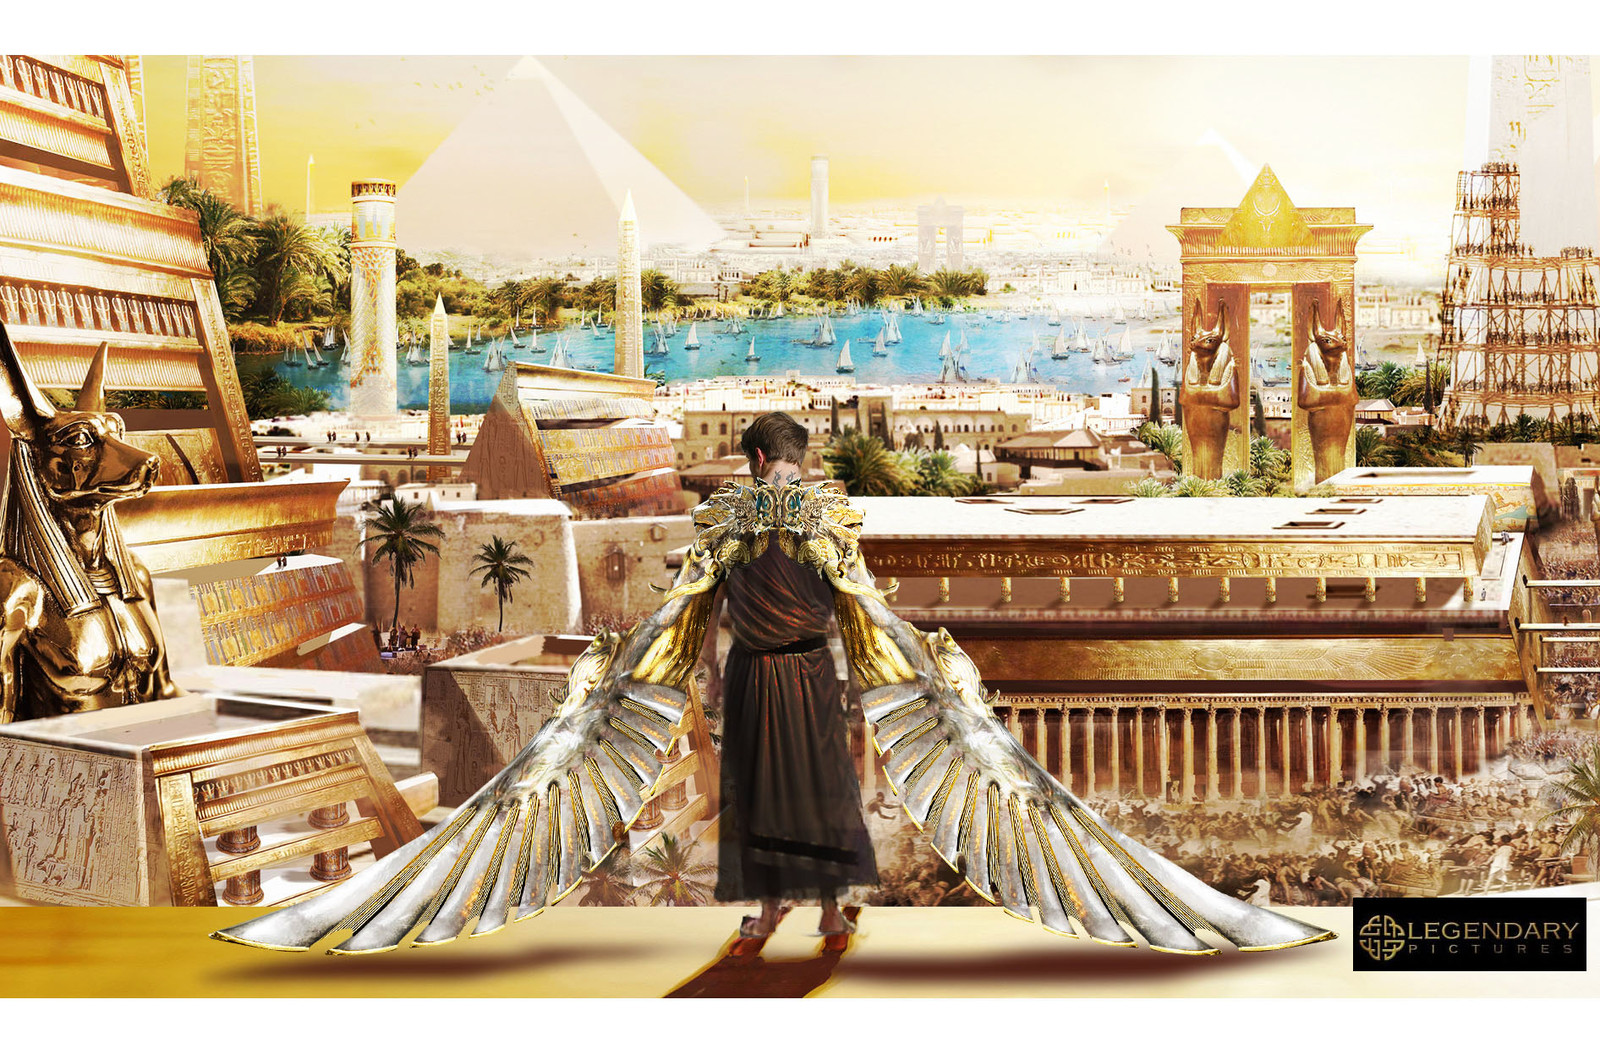 Large scene setting image from the movie Gods of Egypt.